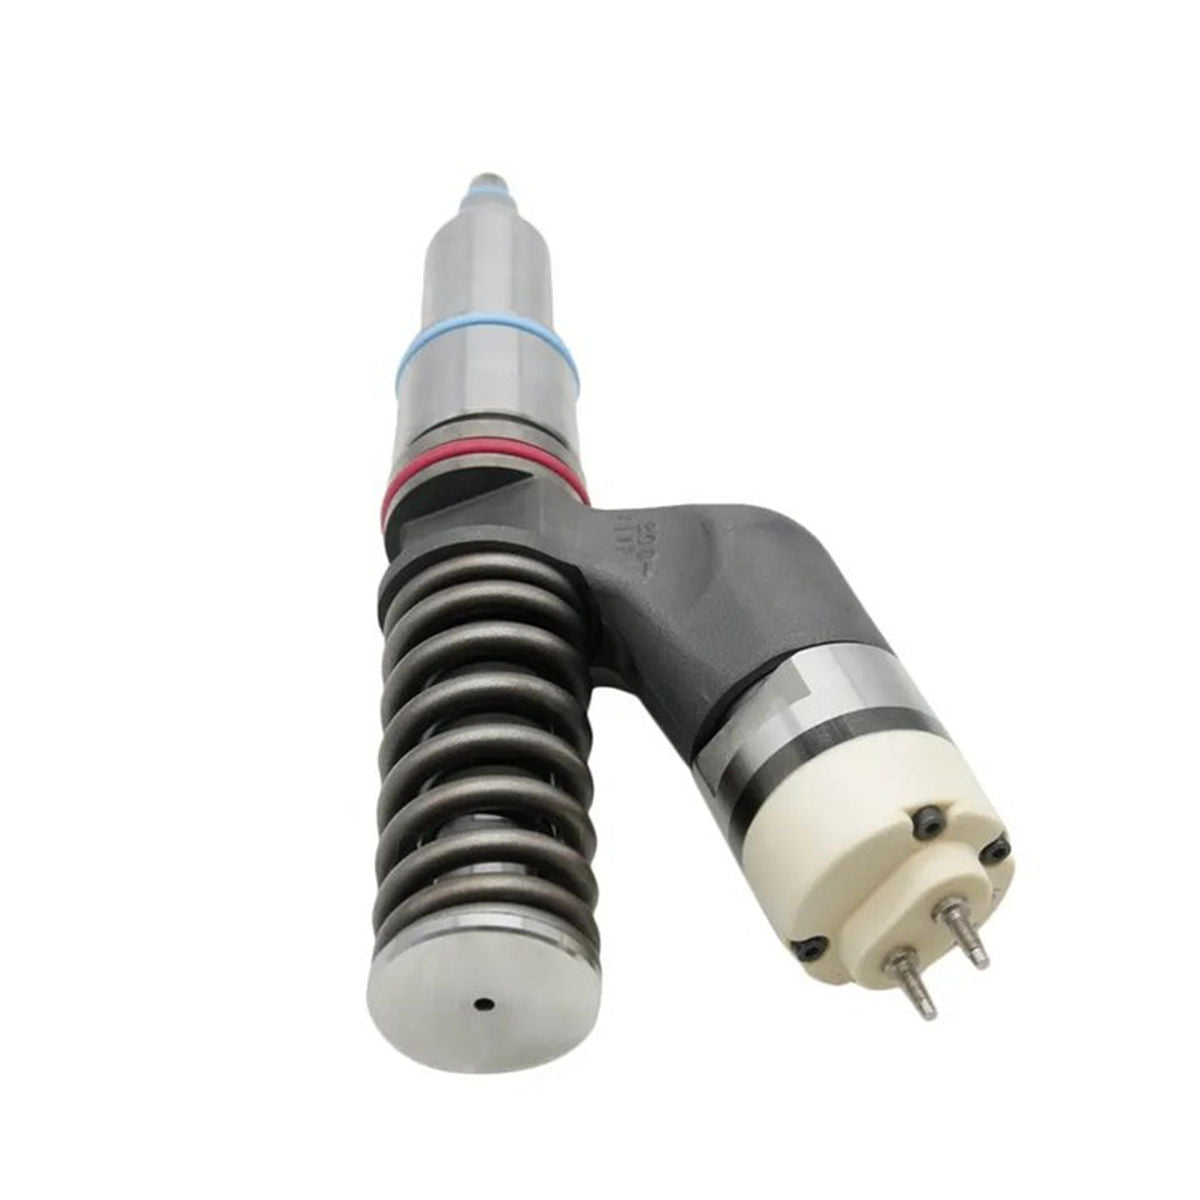 109-5021 0R-4331 Fuel Injector for Caterpillar 3406E Diesel Engine - Sinocmp